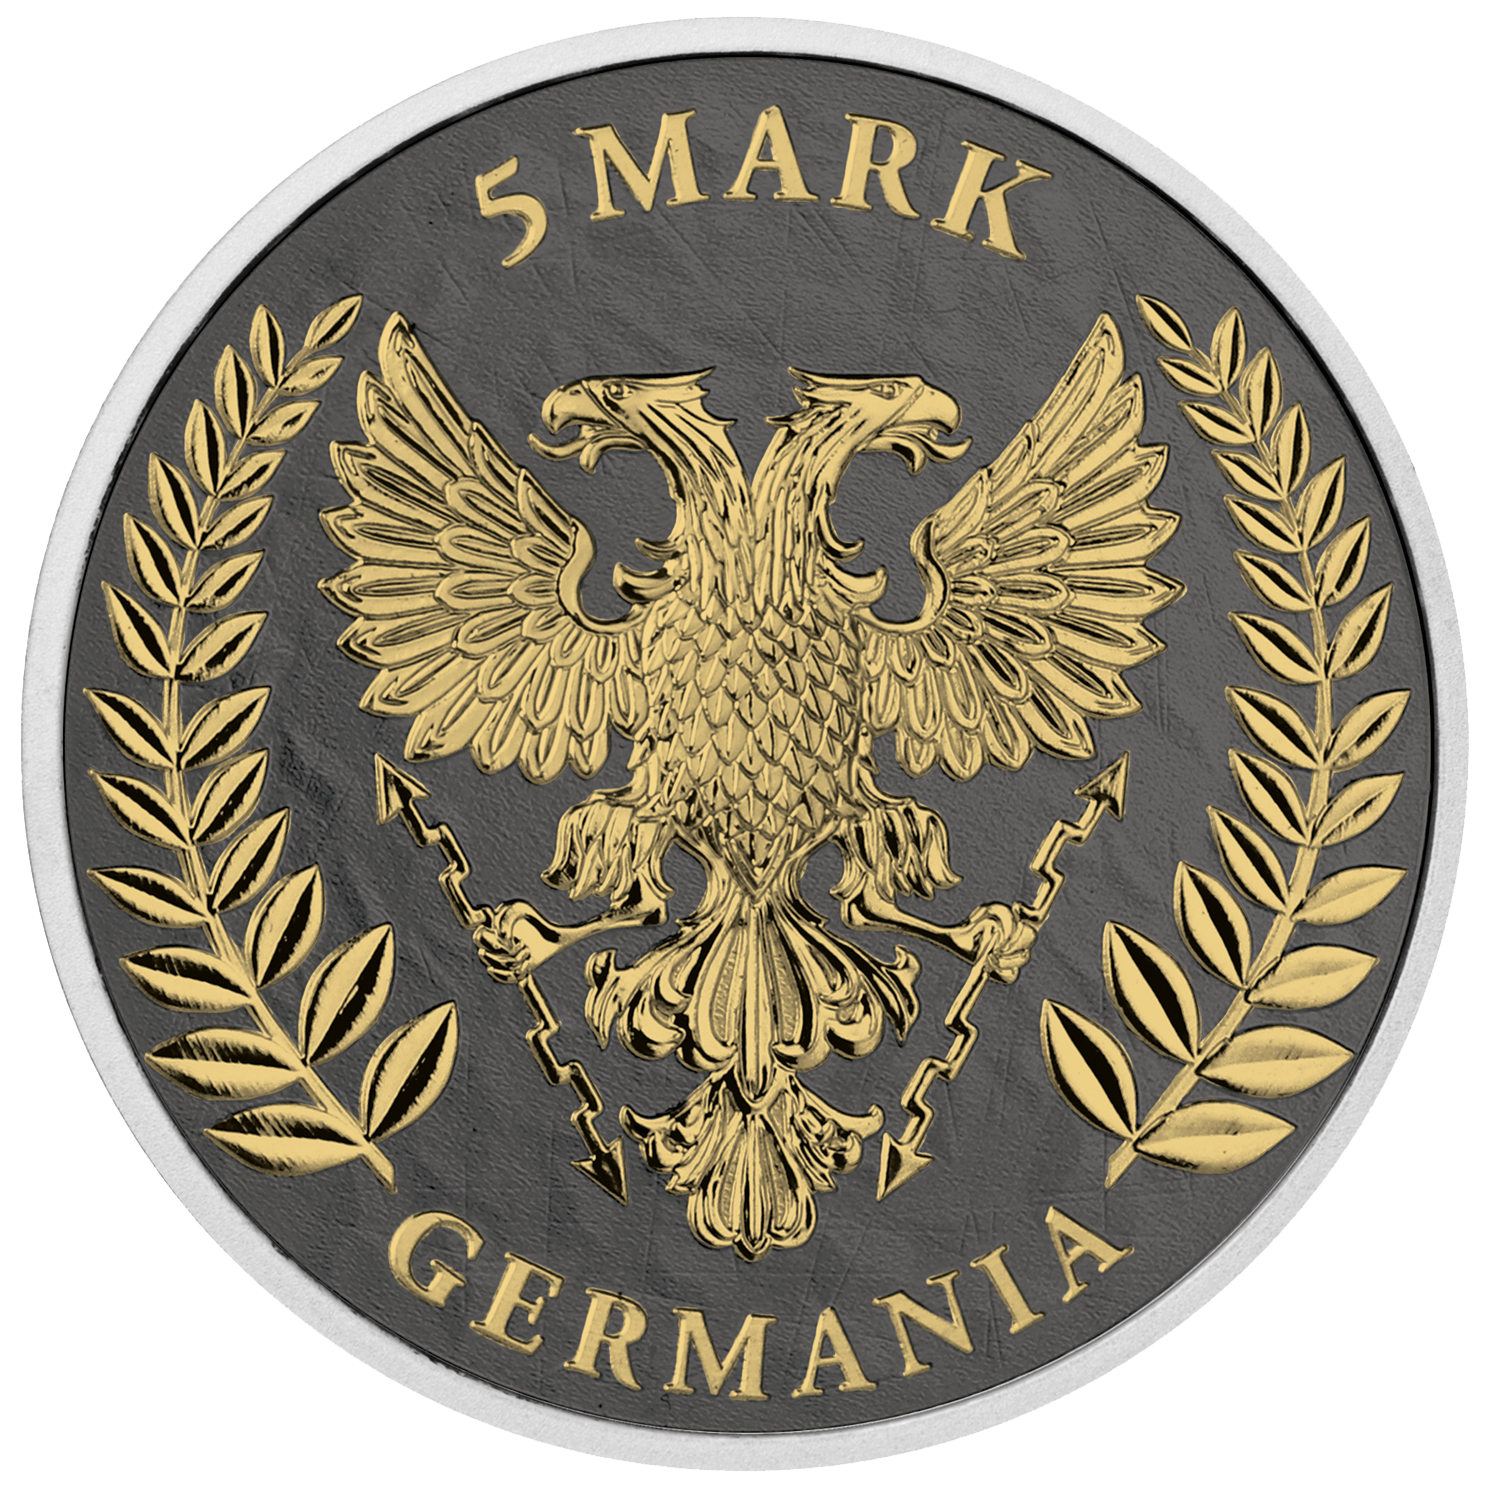 Germania 2019 silver coin Reverse